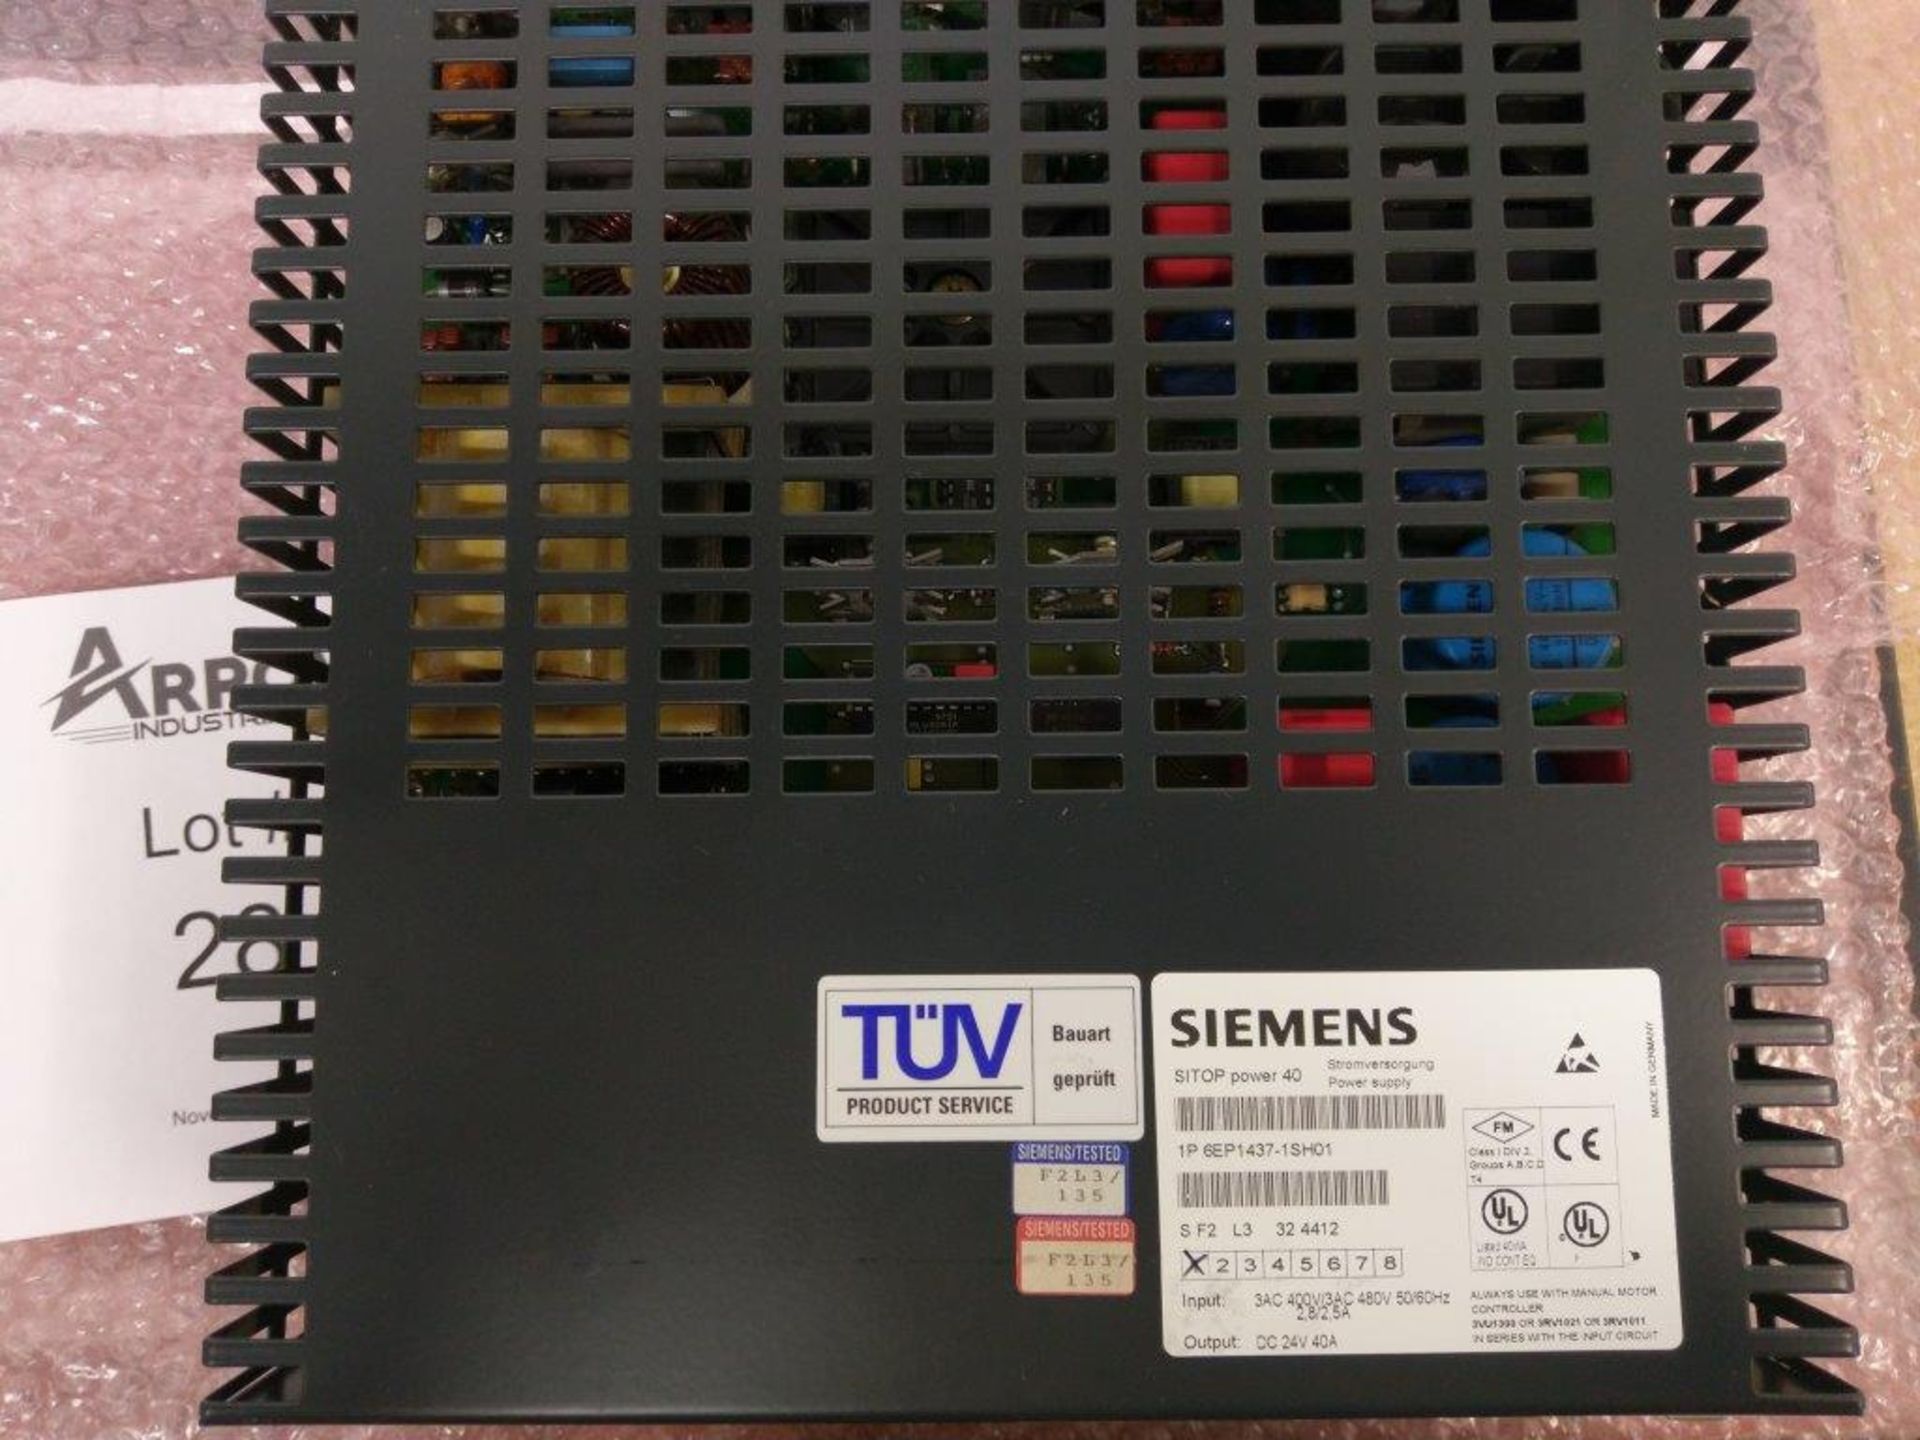 Siemens SITOP power 40 Power Supply Model 1P 6EP1437-1SH01 - Image 3 of 3